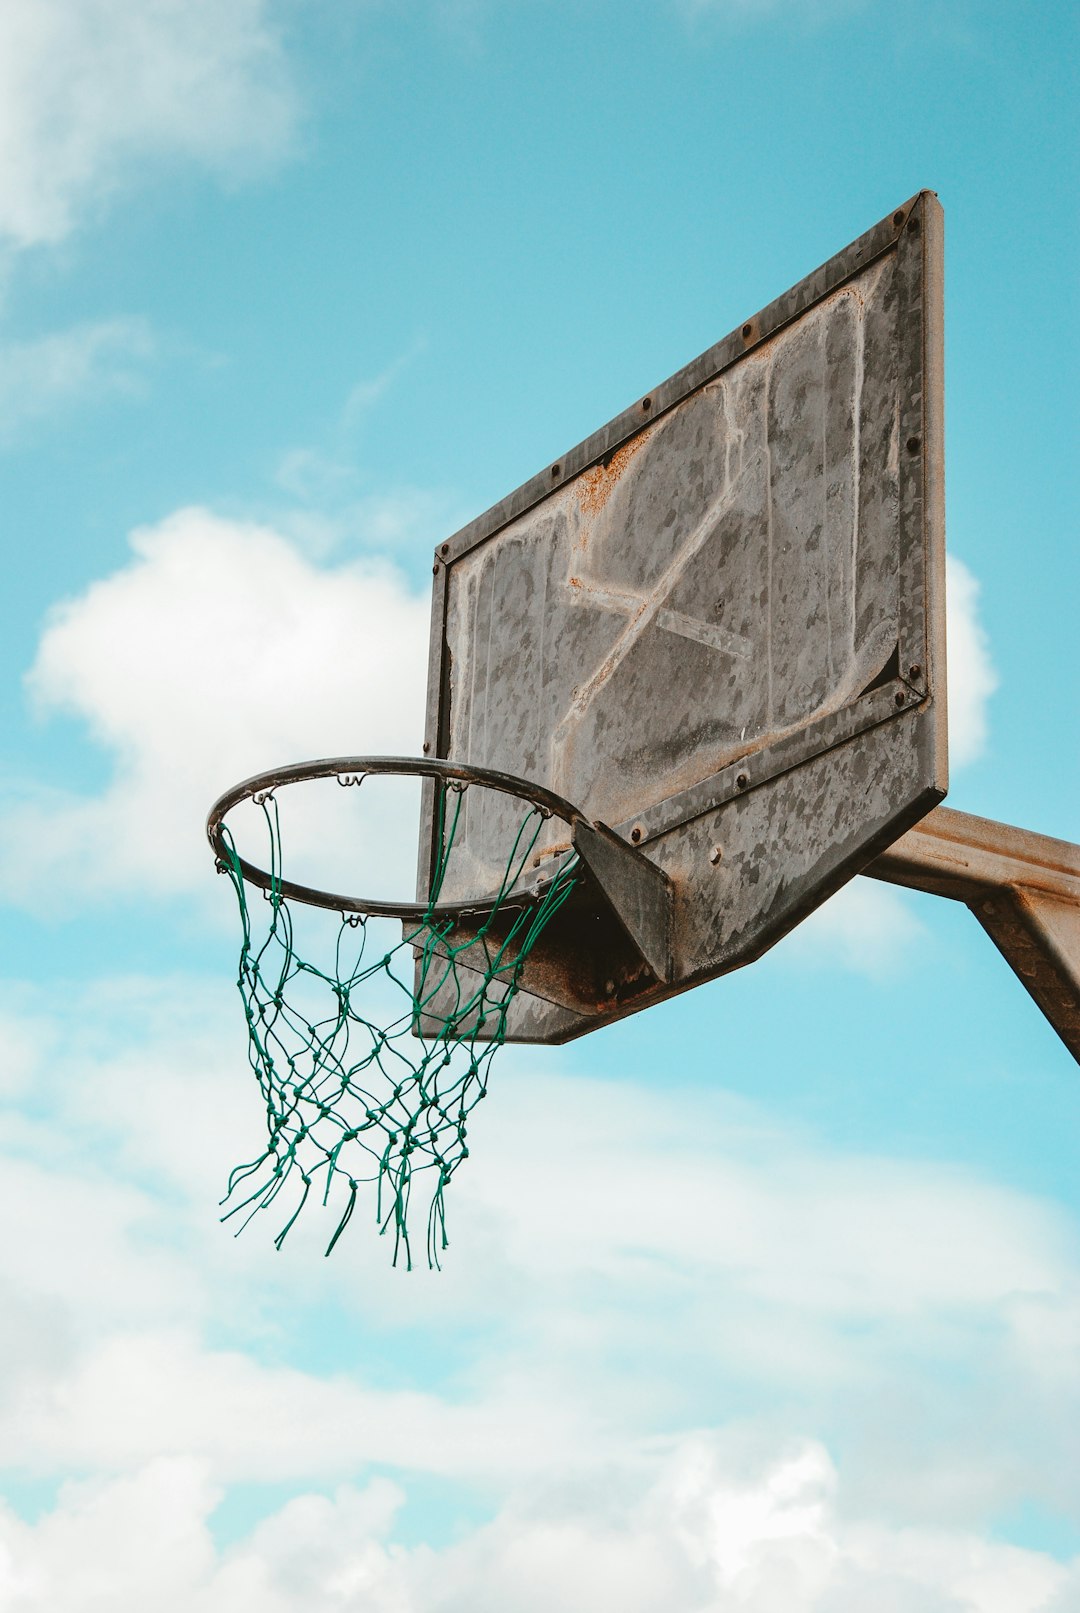 basketball hoop with net unde blue sky